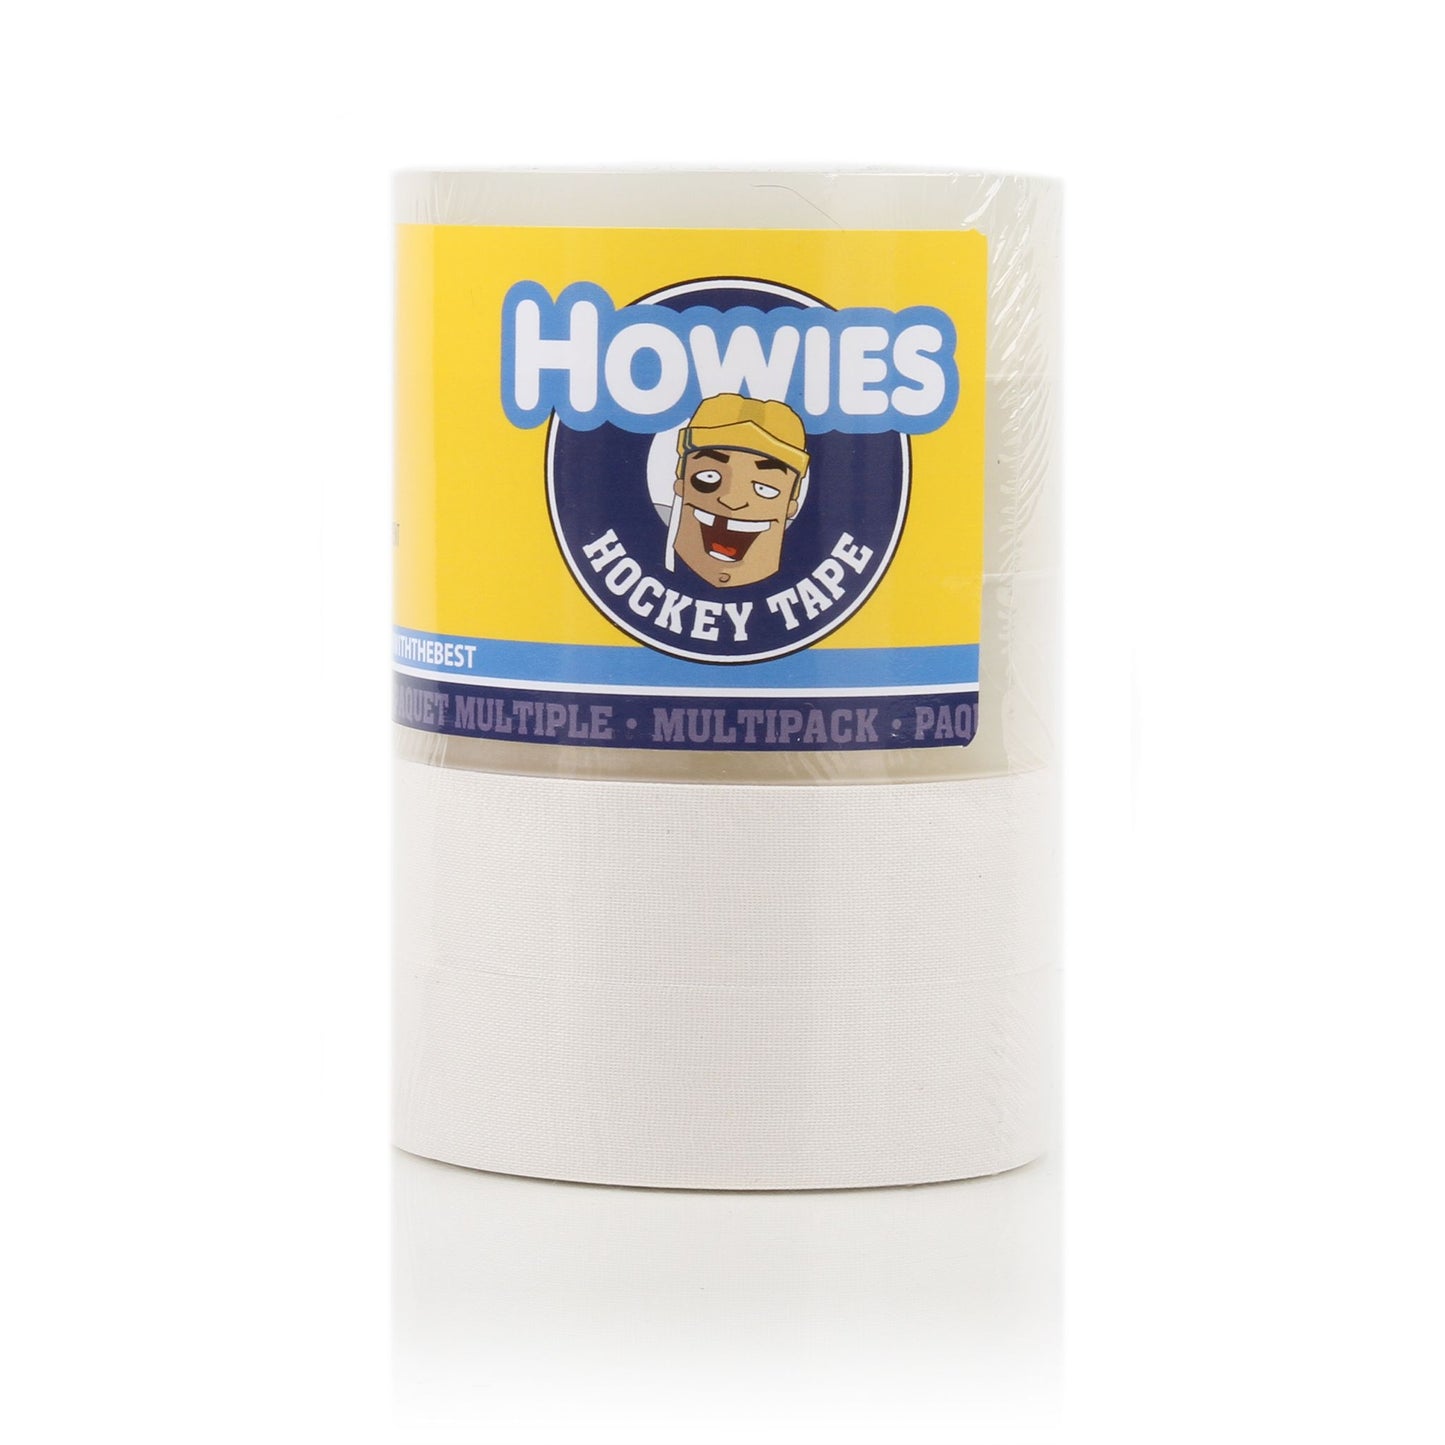 Howies Hockey Tape SET  - 2weiß 25mm + 3 Stutzentape Shin Pad 25mm